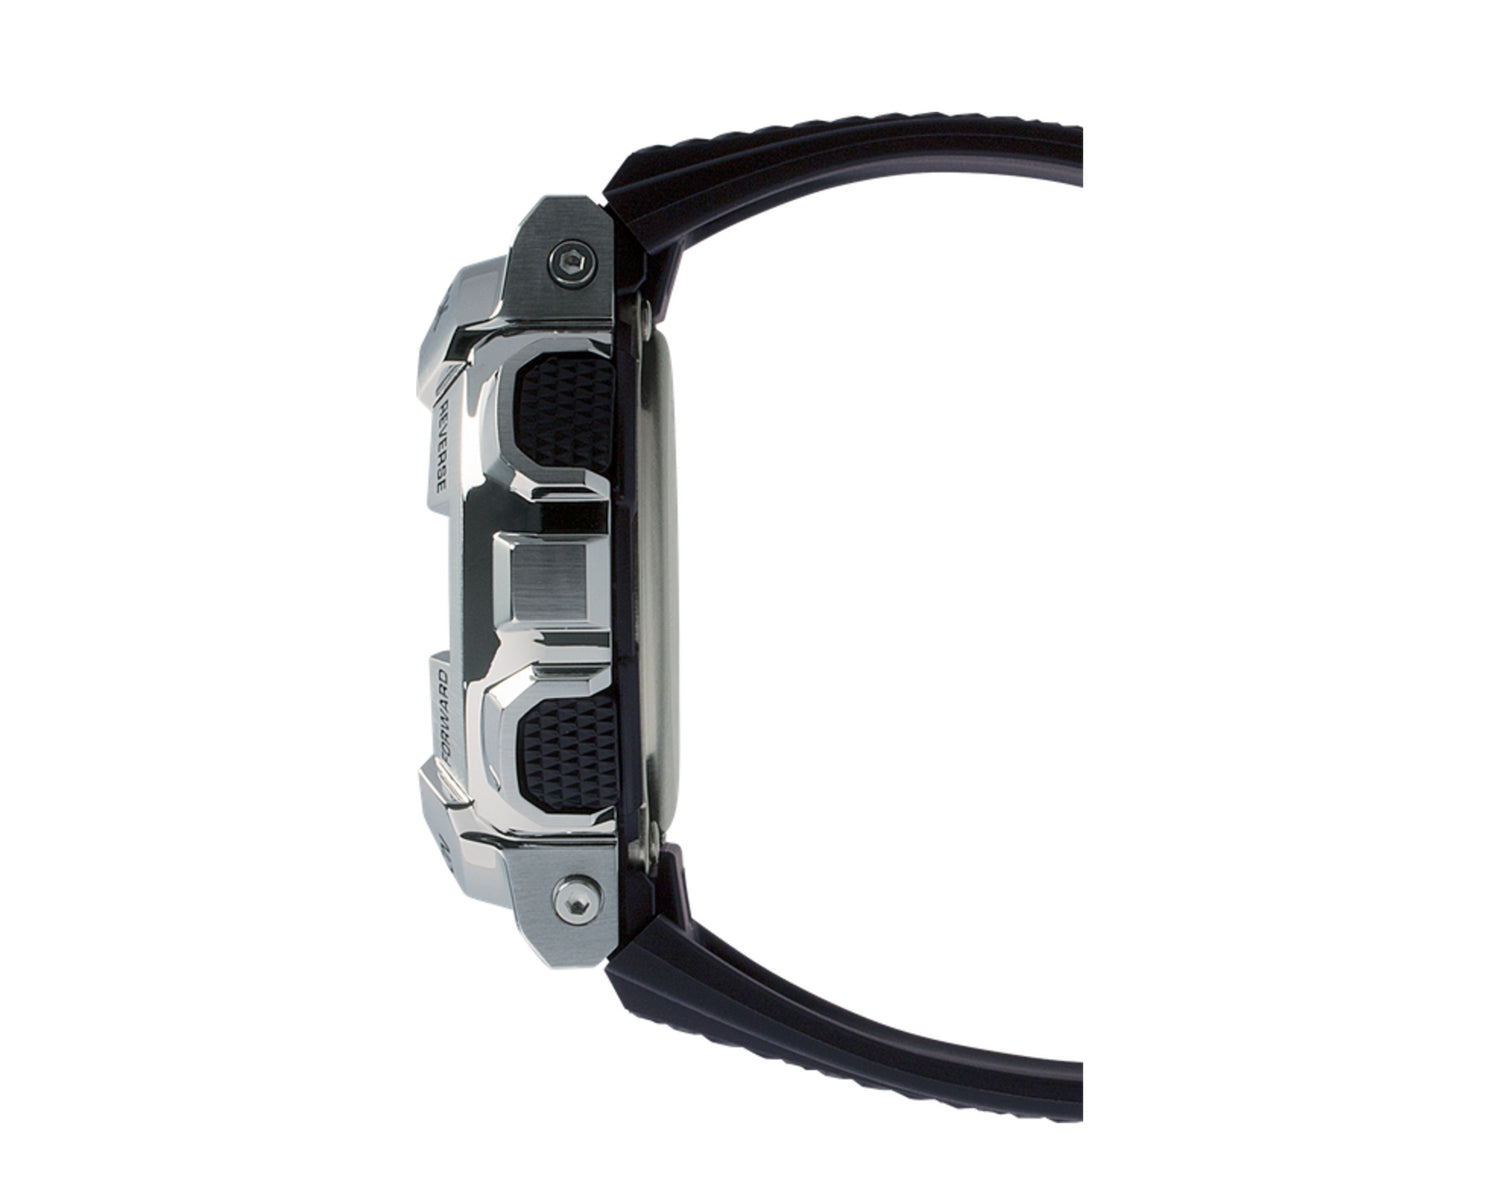 Casio G-Shock GM110 Analog-Digital Metal-Resin Watch